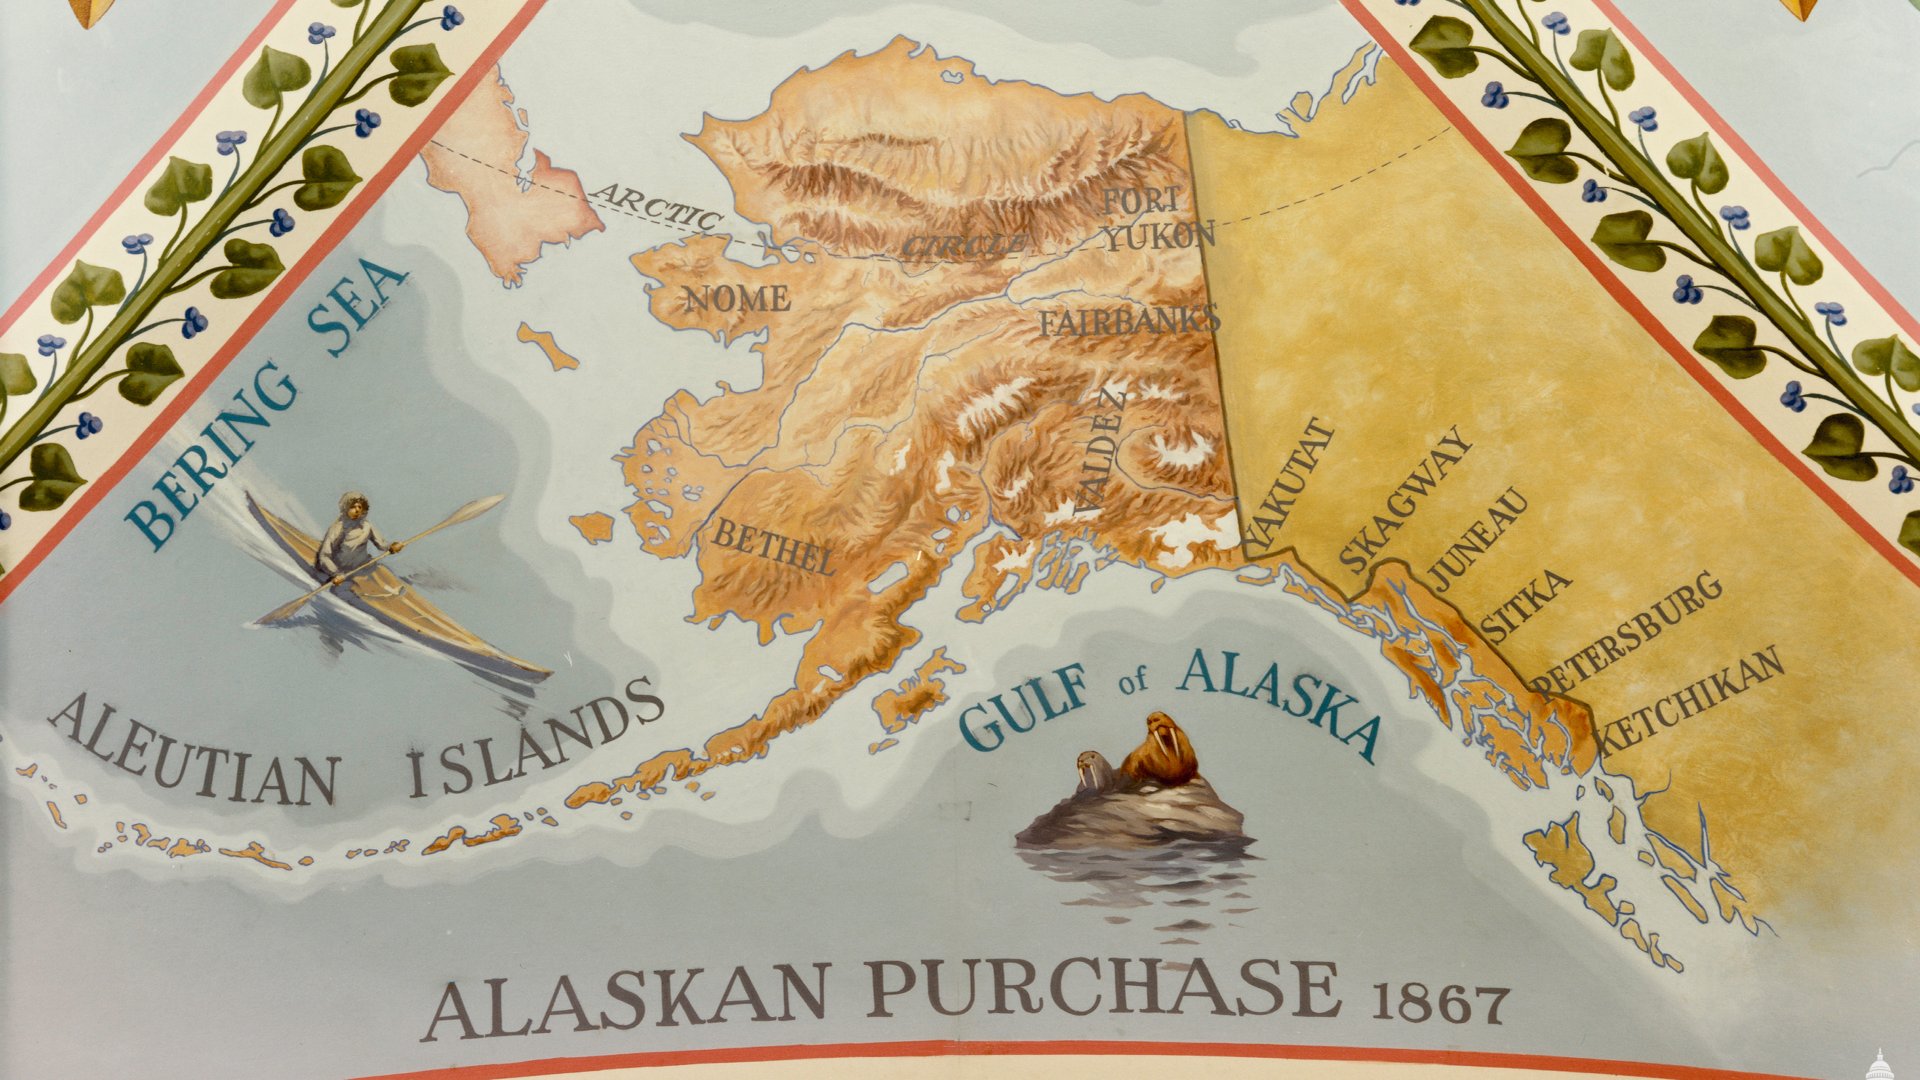 1867: The Alaska Purchase was Arranged by an Austrian?